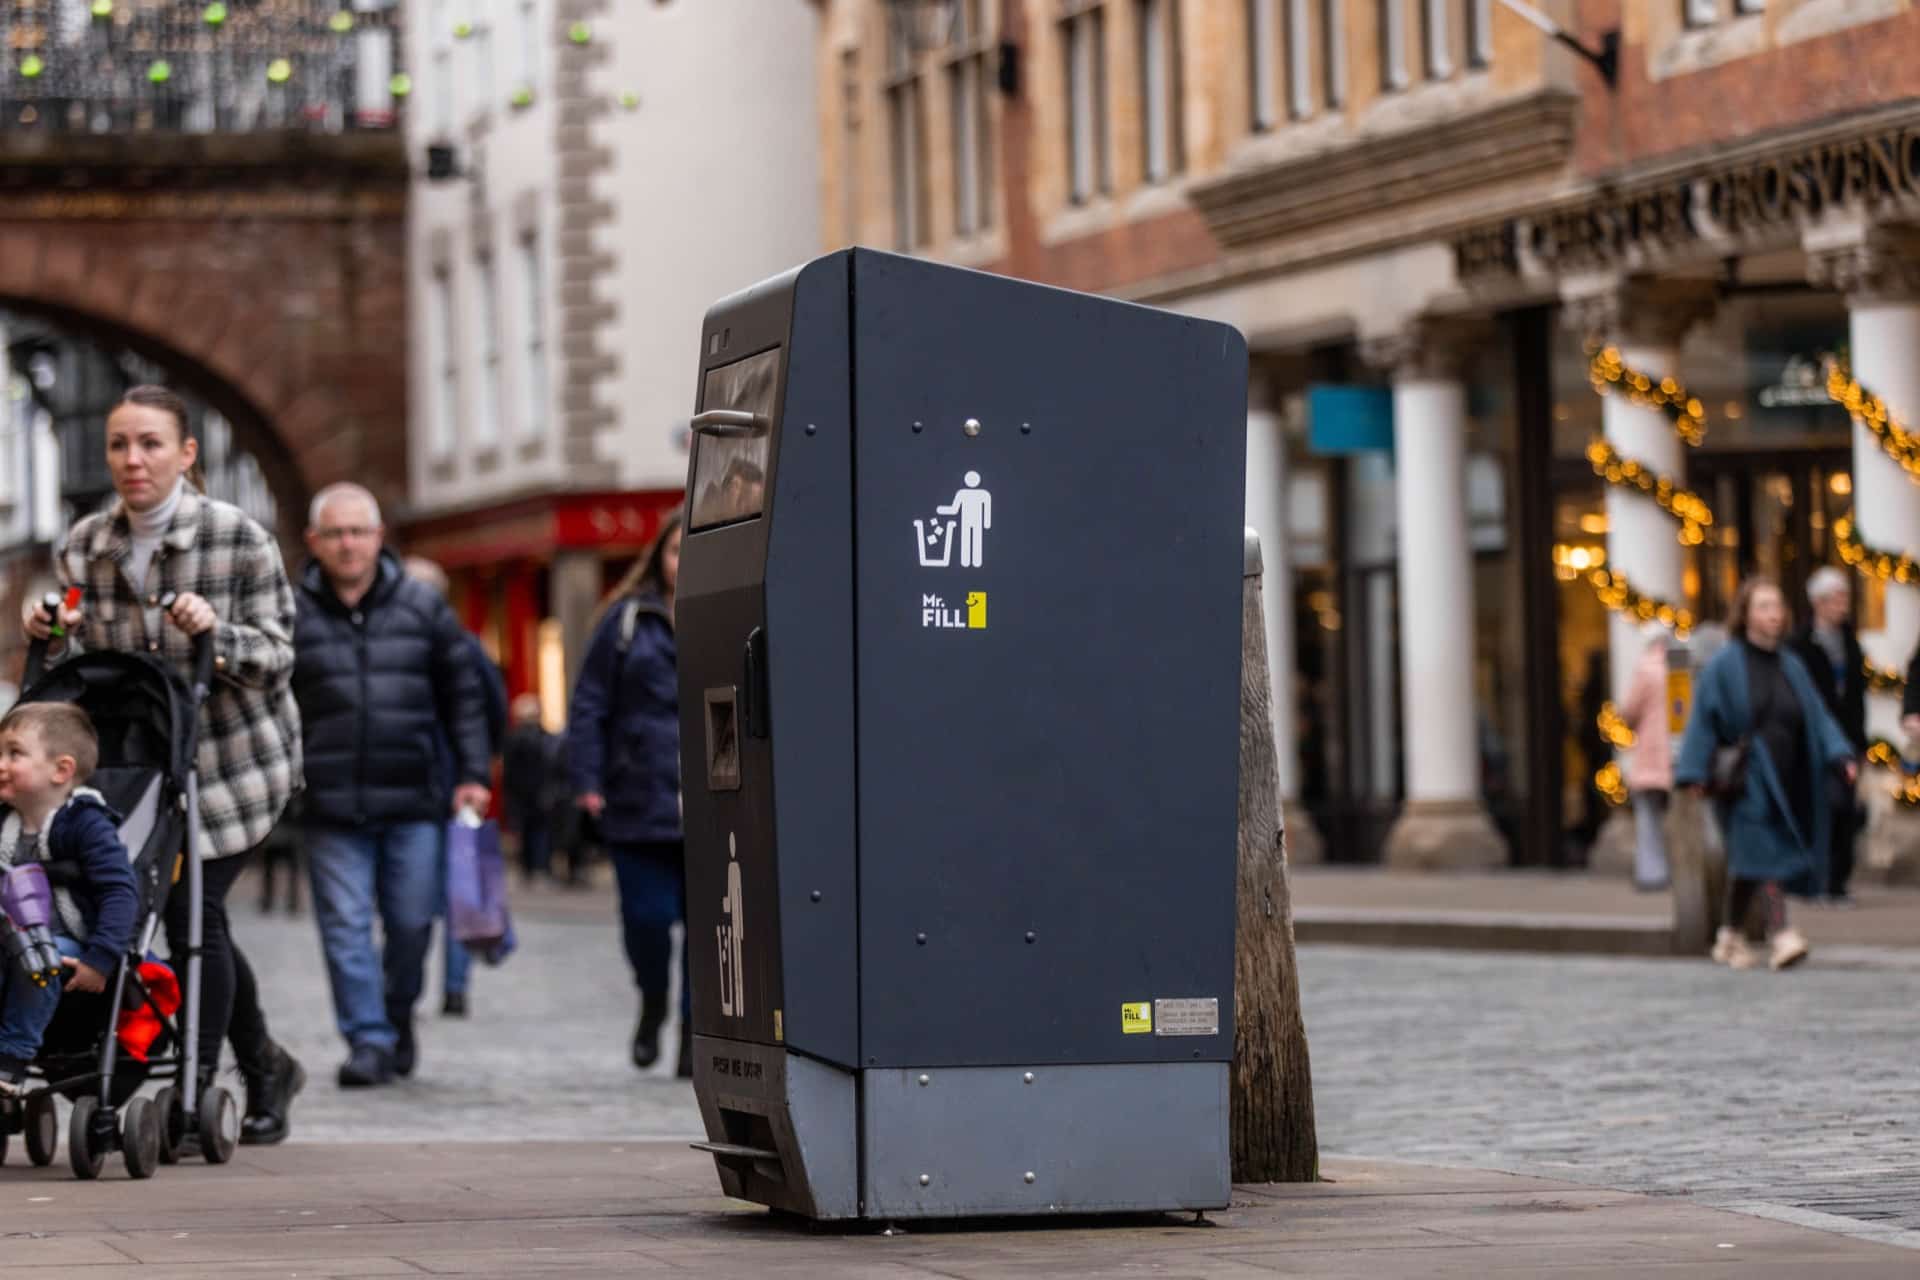 Smart waste bin in Chester city